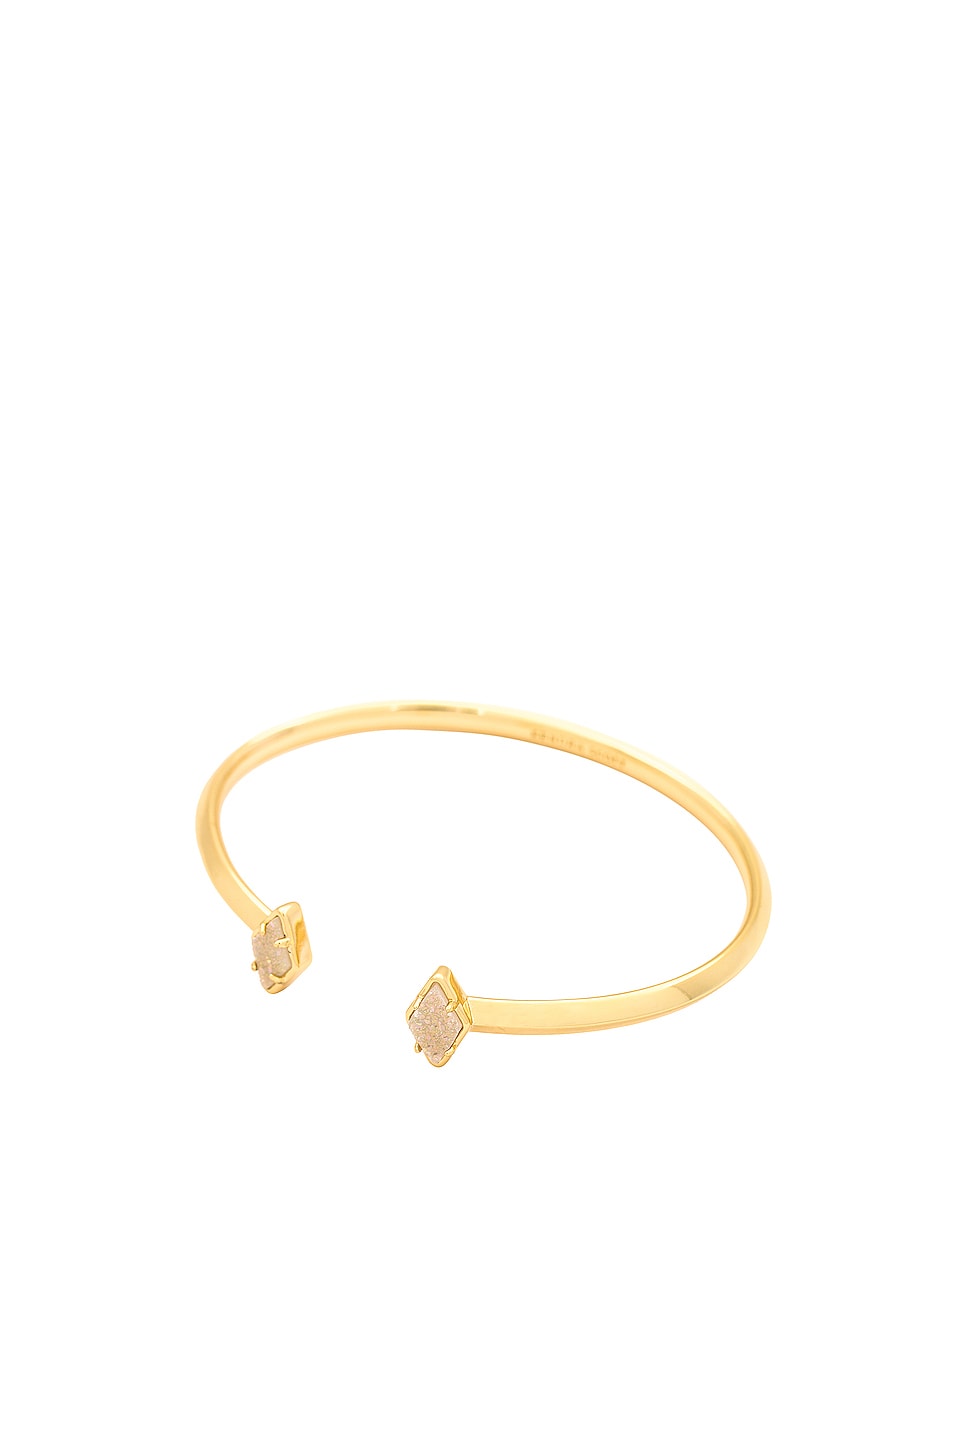 Kendra Scott 14k Gold-Plated Mixed Stone Flex Cuff Bracelet | CoolSprings  Galleria